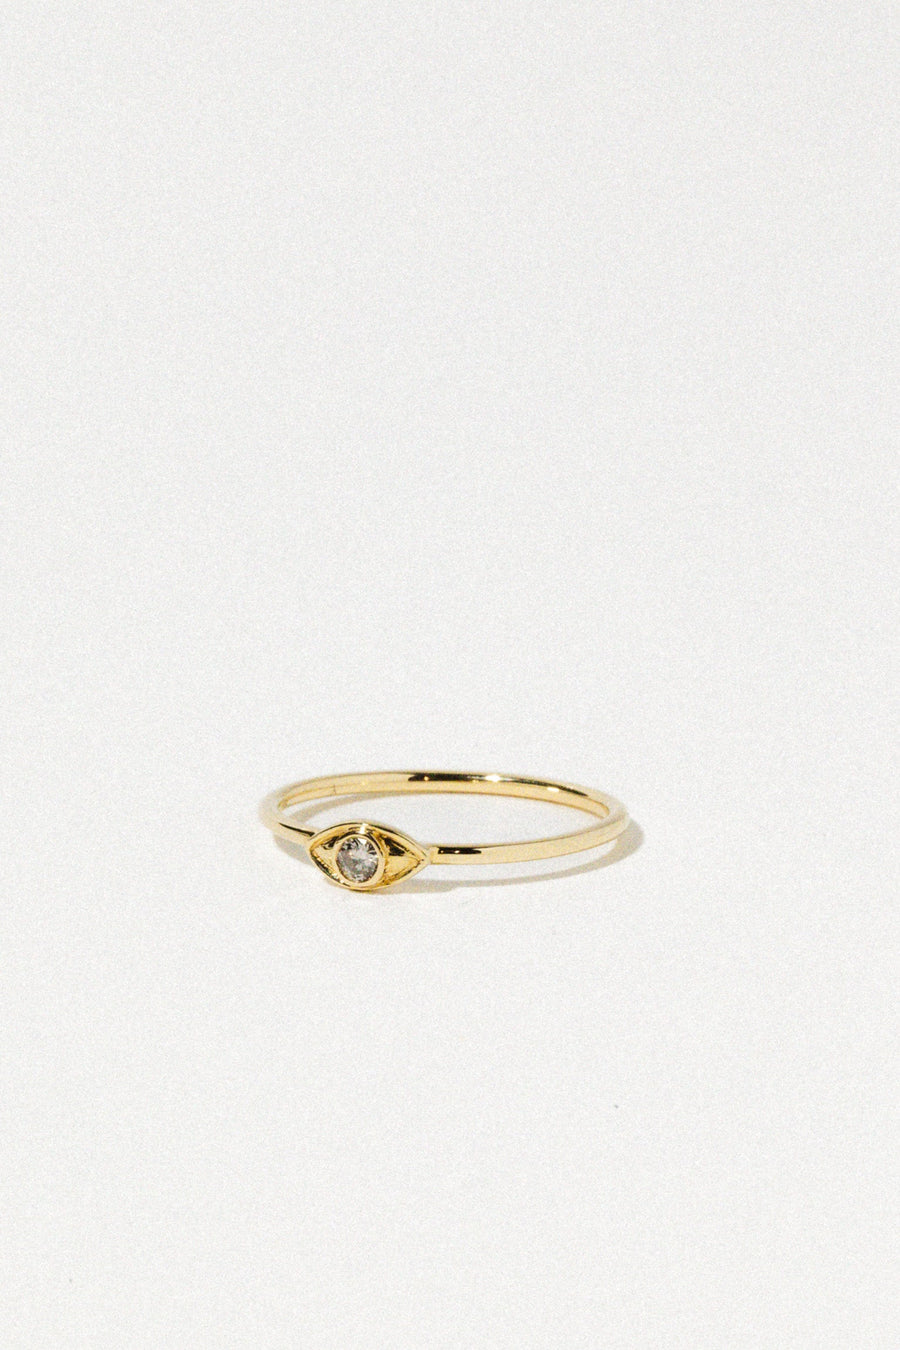 Tresor Jewelry Gold / US 5 14kt Seeing Eye Diamond Ring